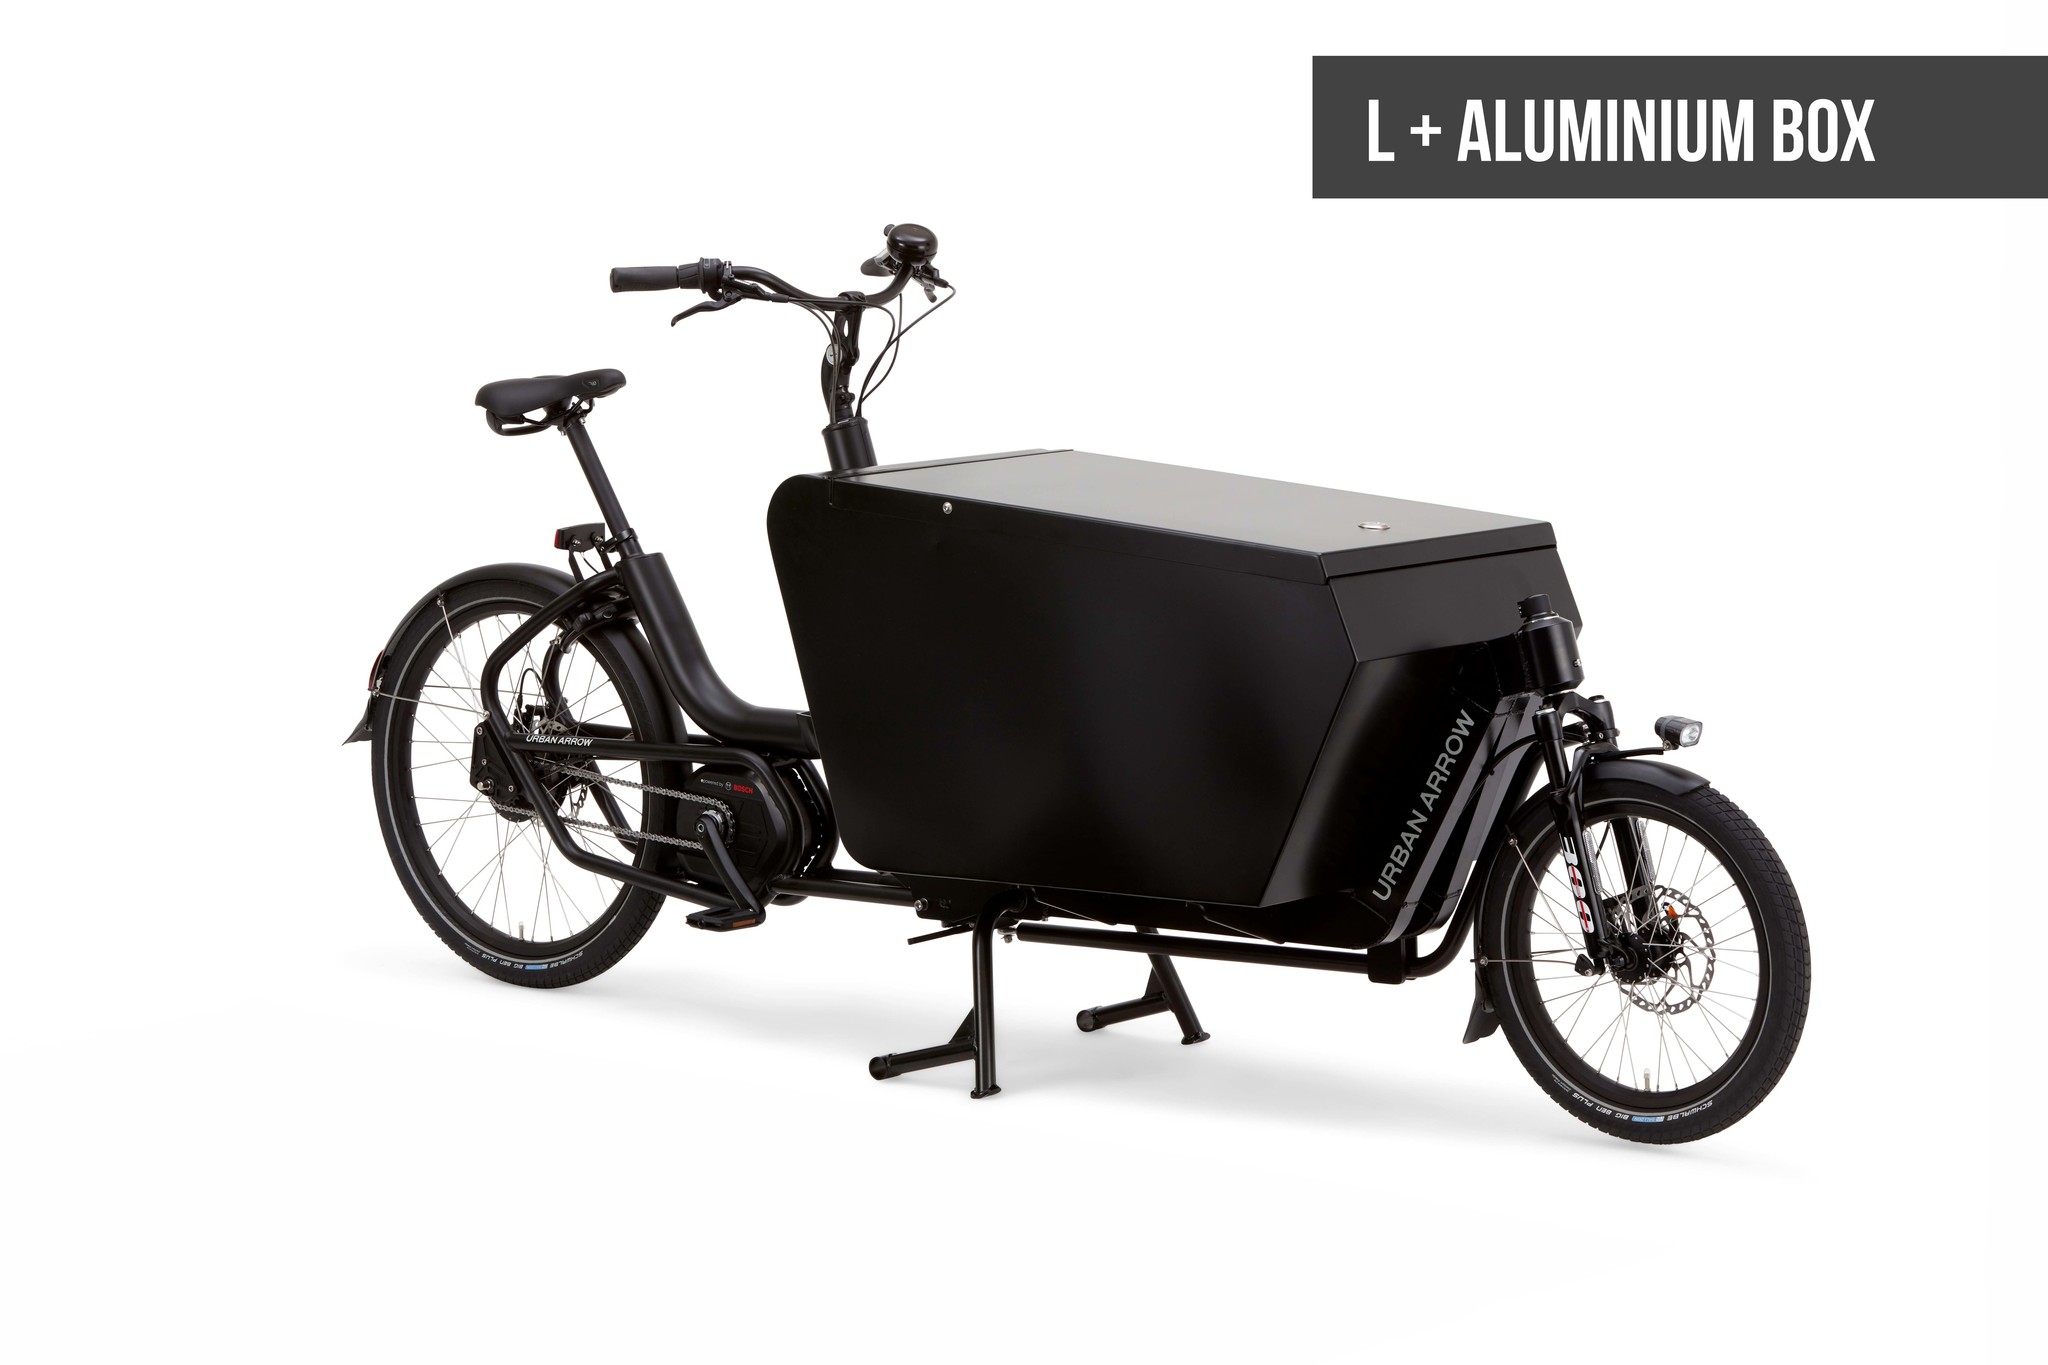 ledematen viering emmer Urban Arrow Cargo Aluminium Box | Free Wheely - Free Wheely